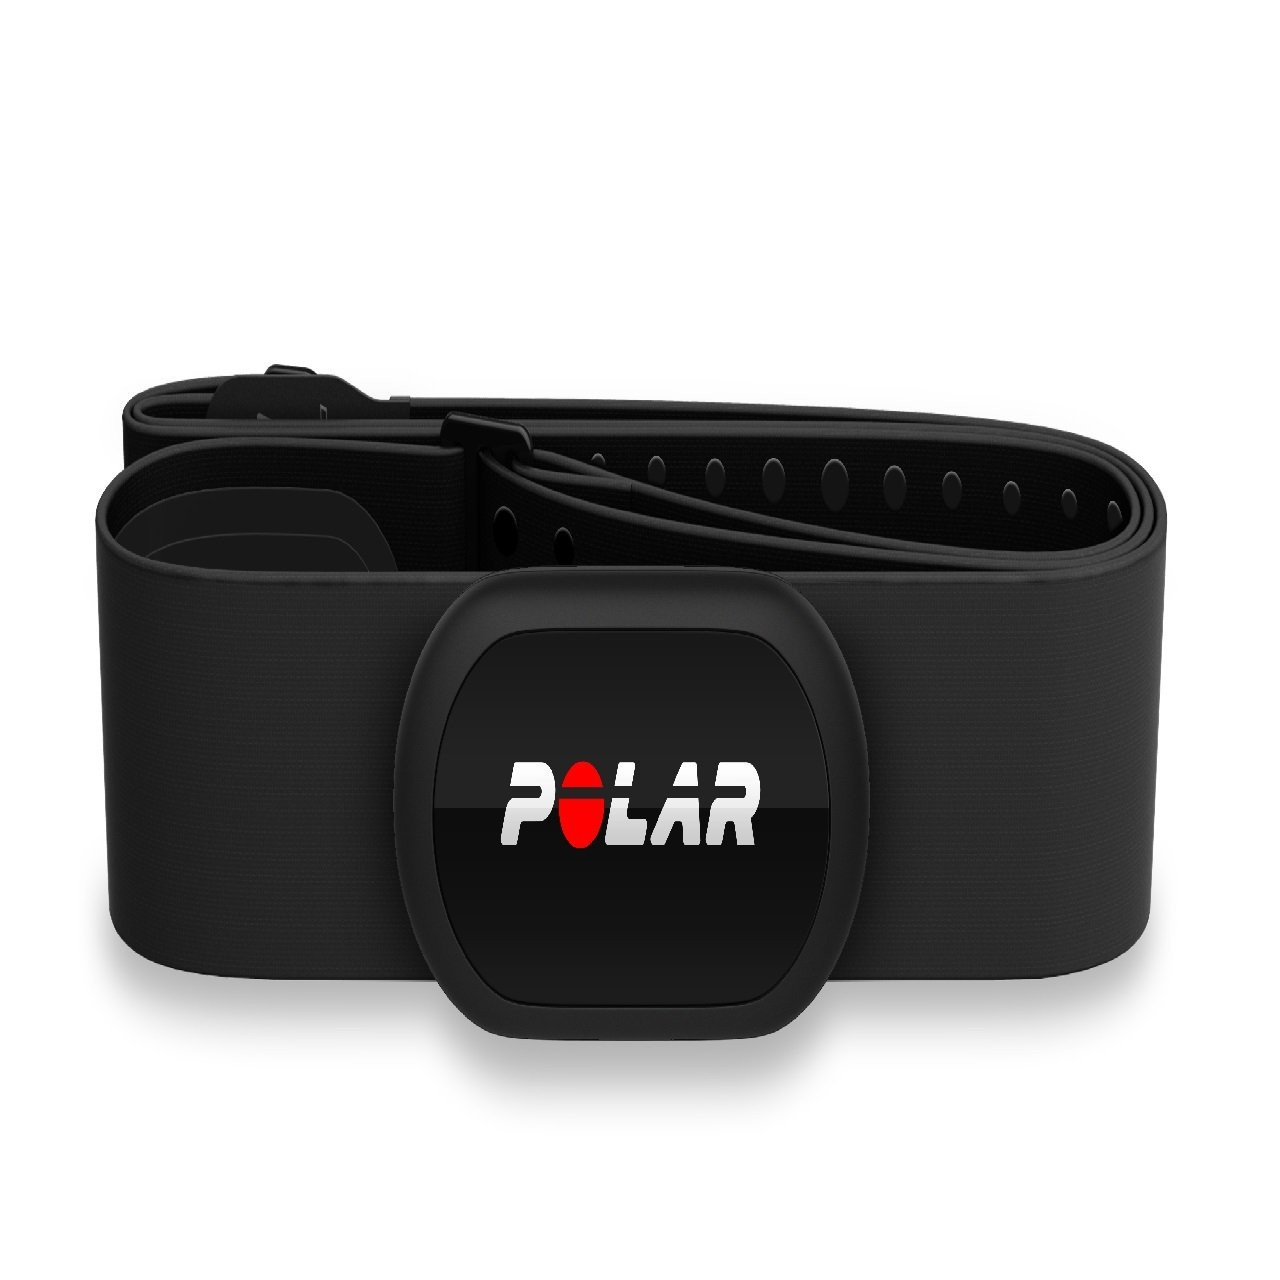 Polar H10 heart rate sensor.